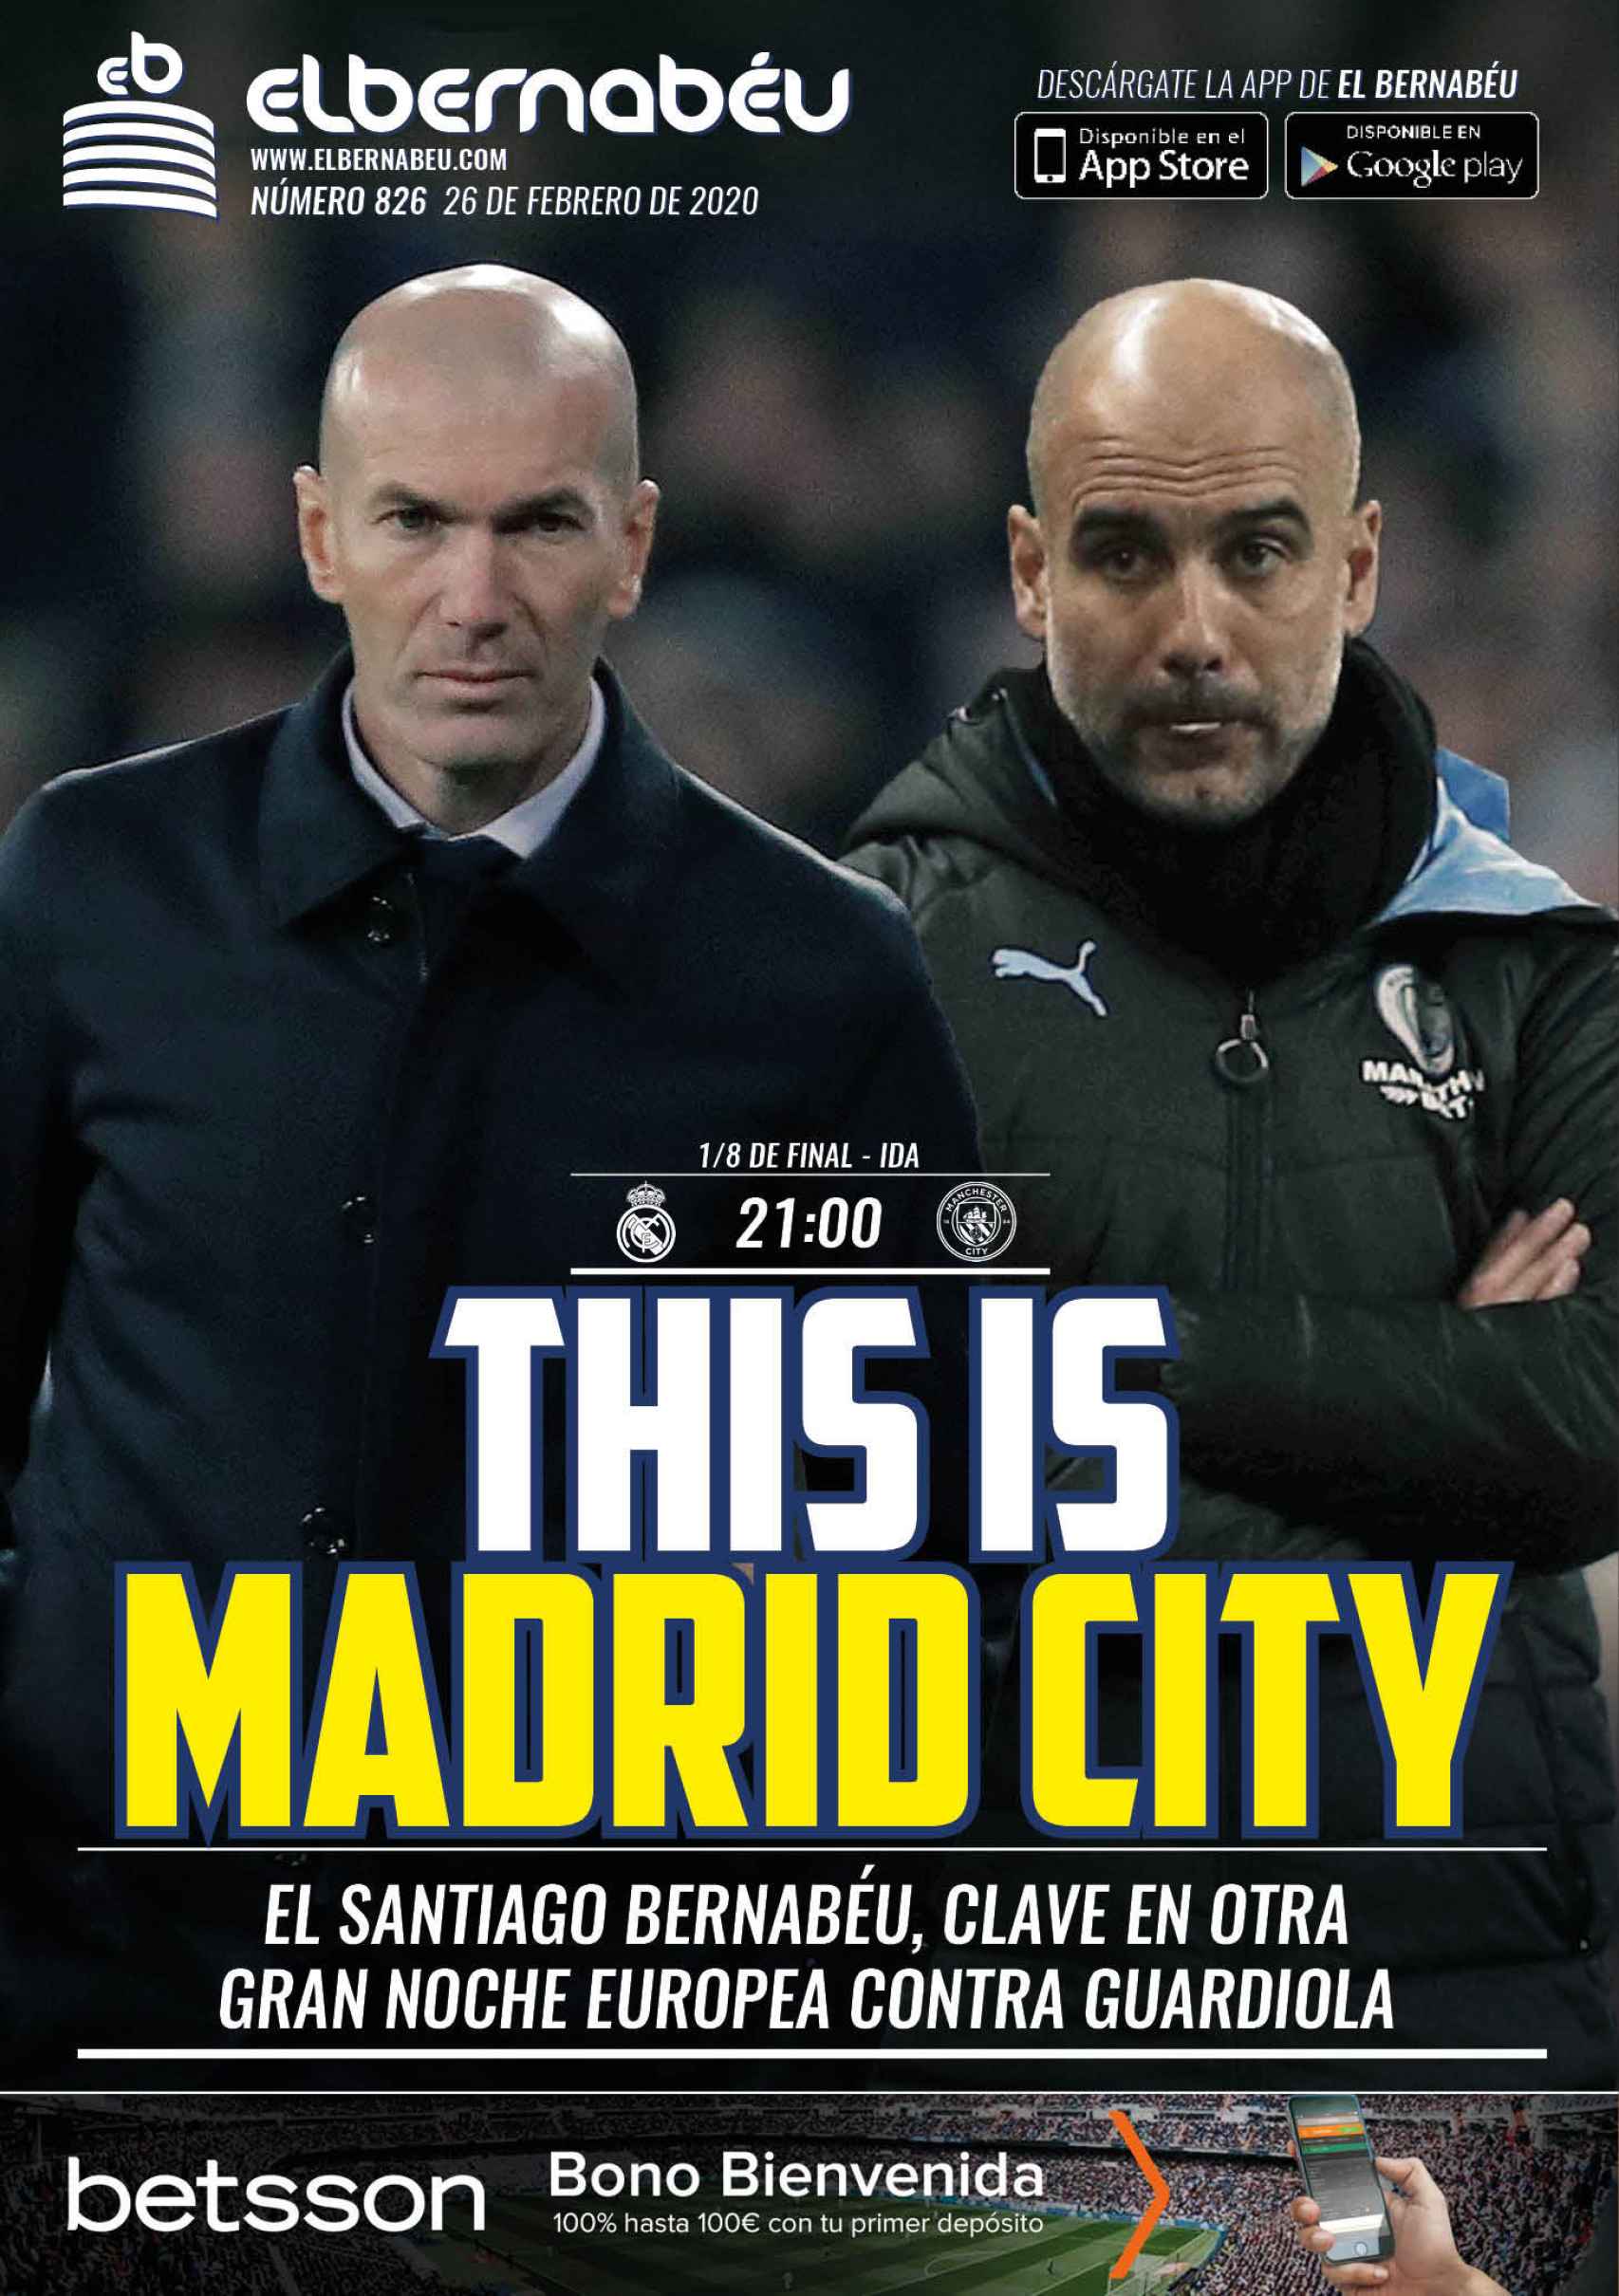 La portada de El Bernabéu (26/02/2020)